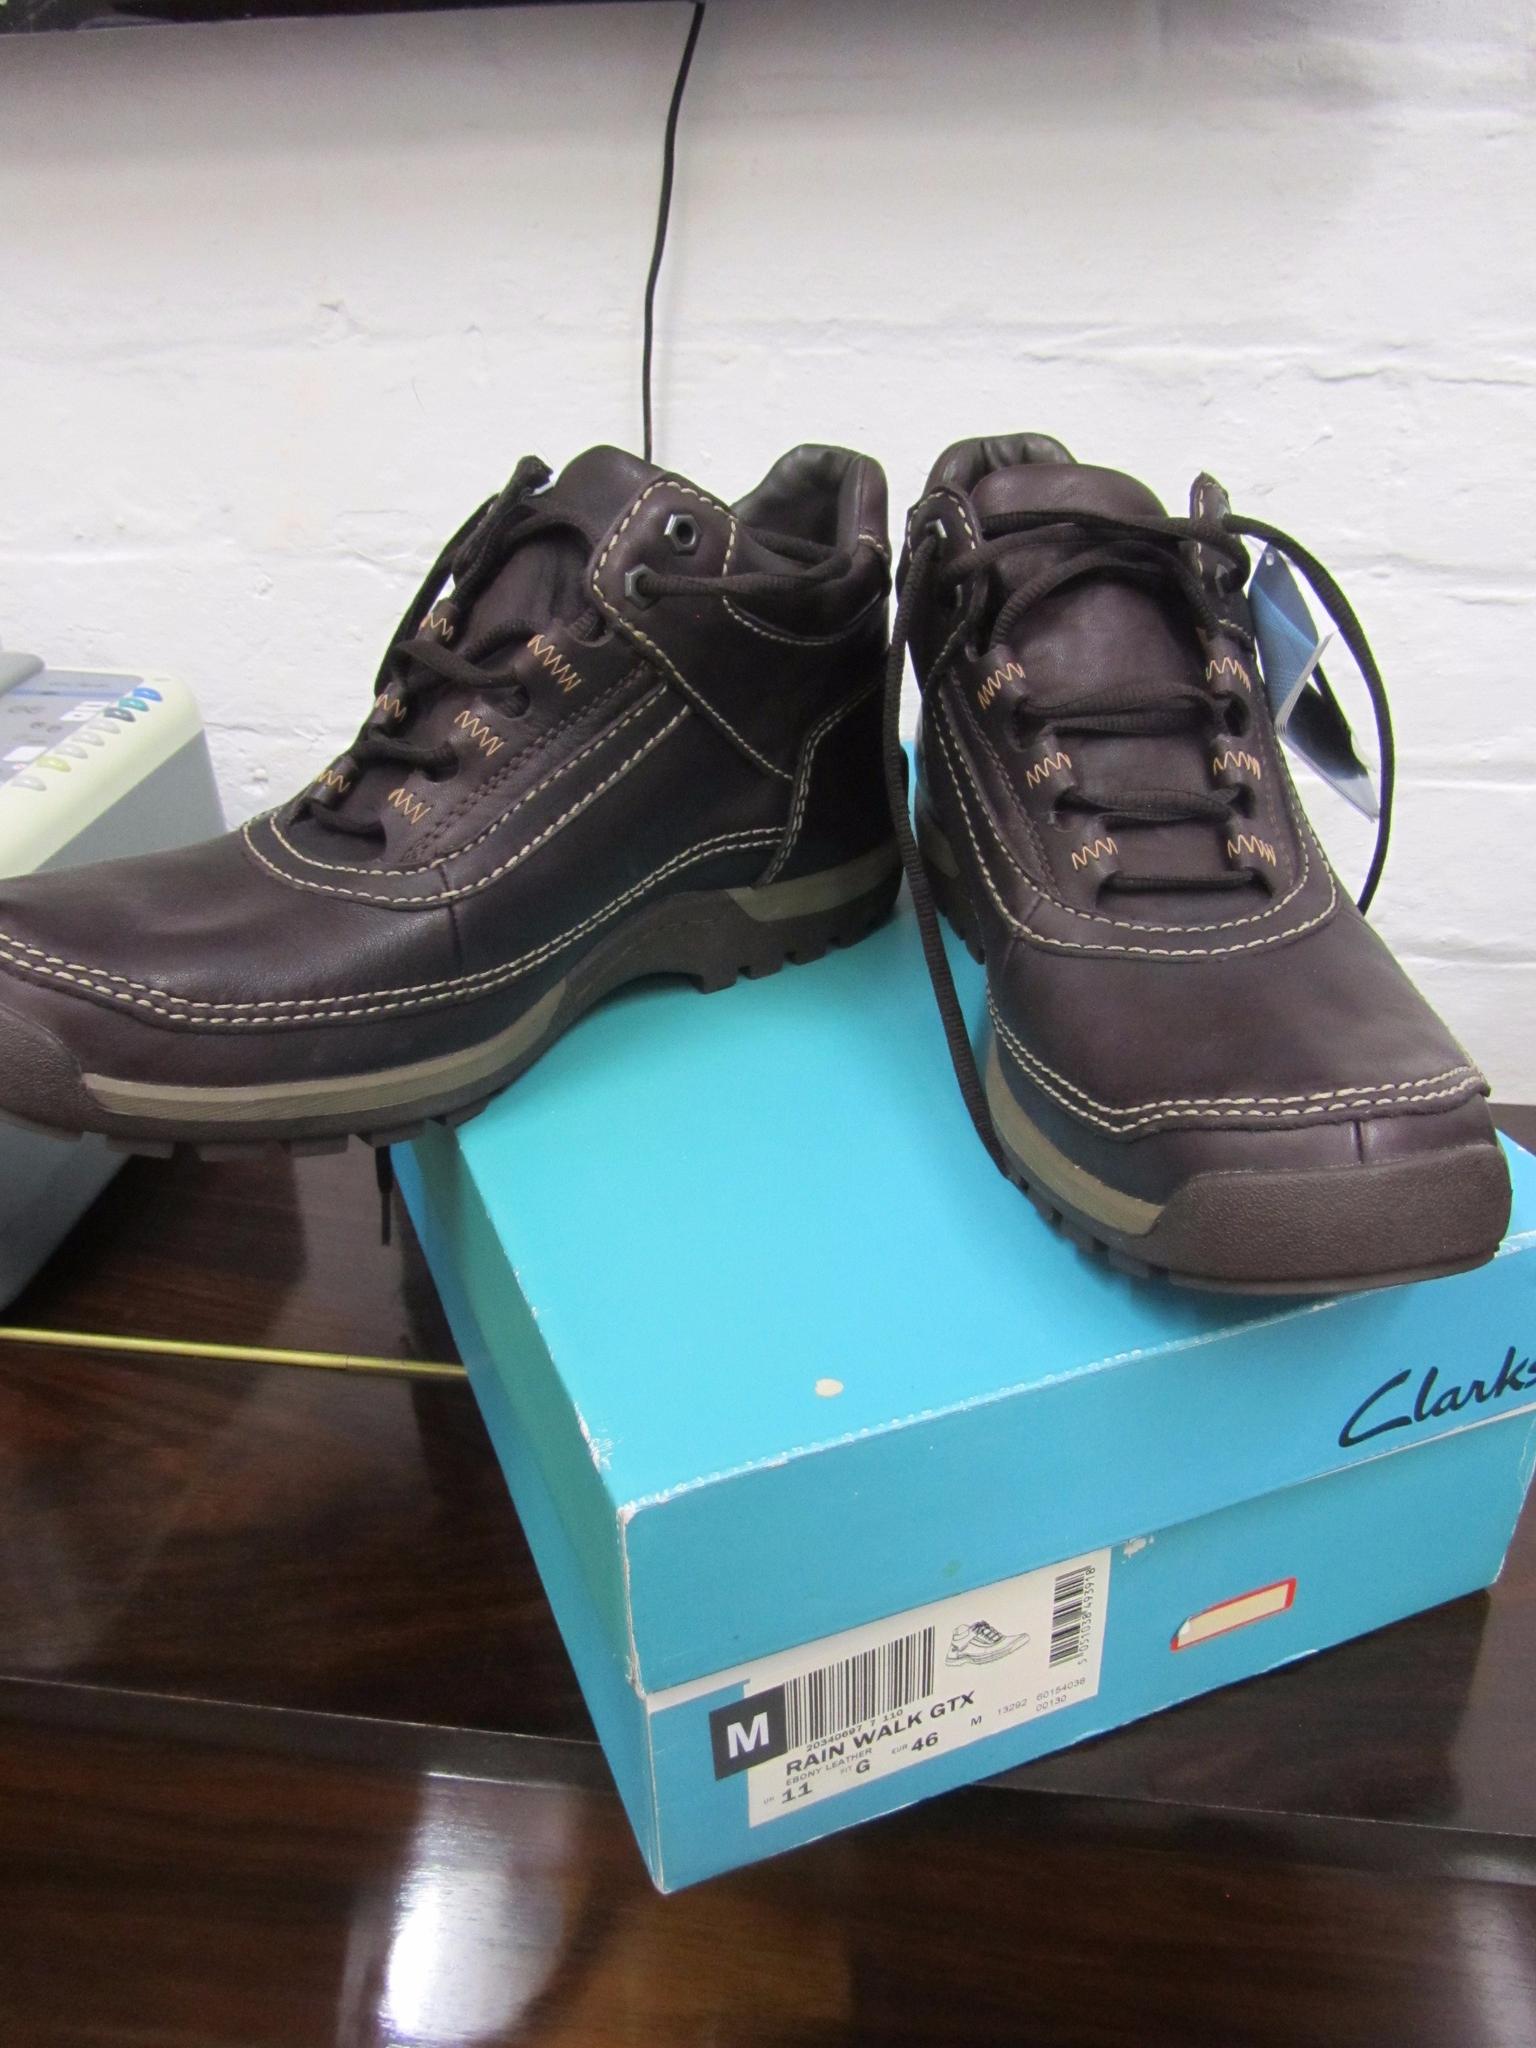 clarks walking shoes sale